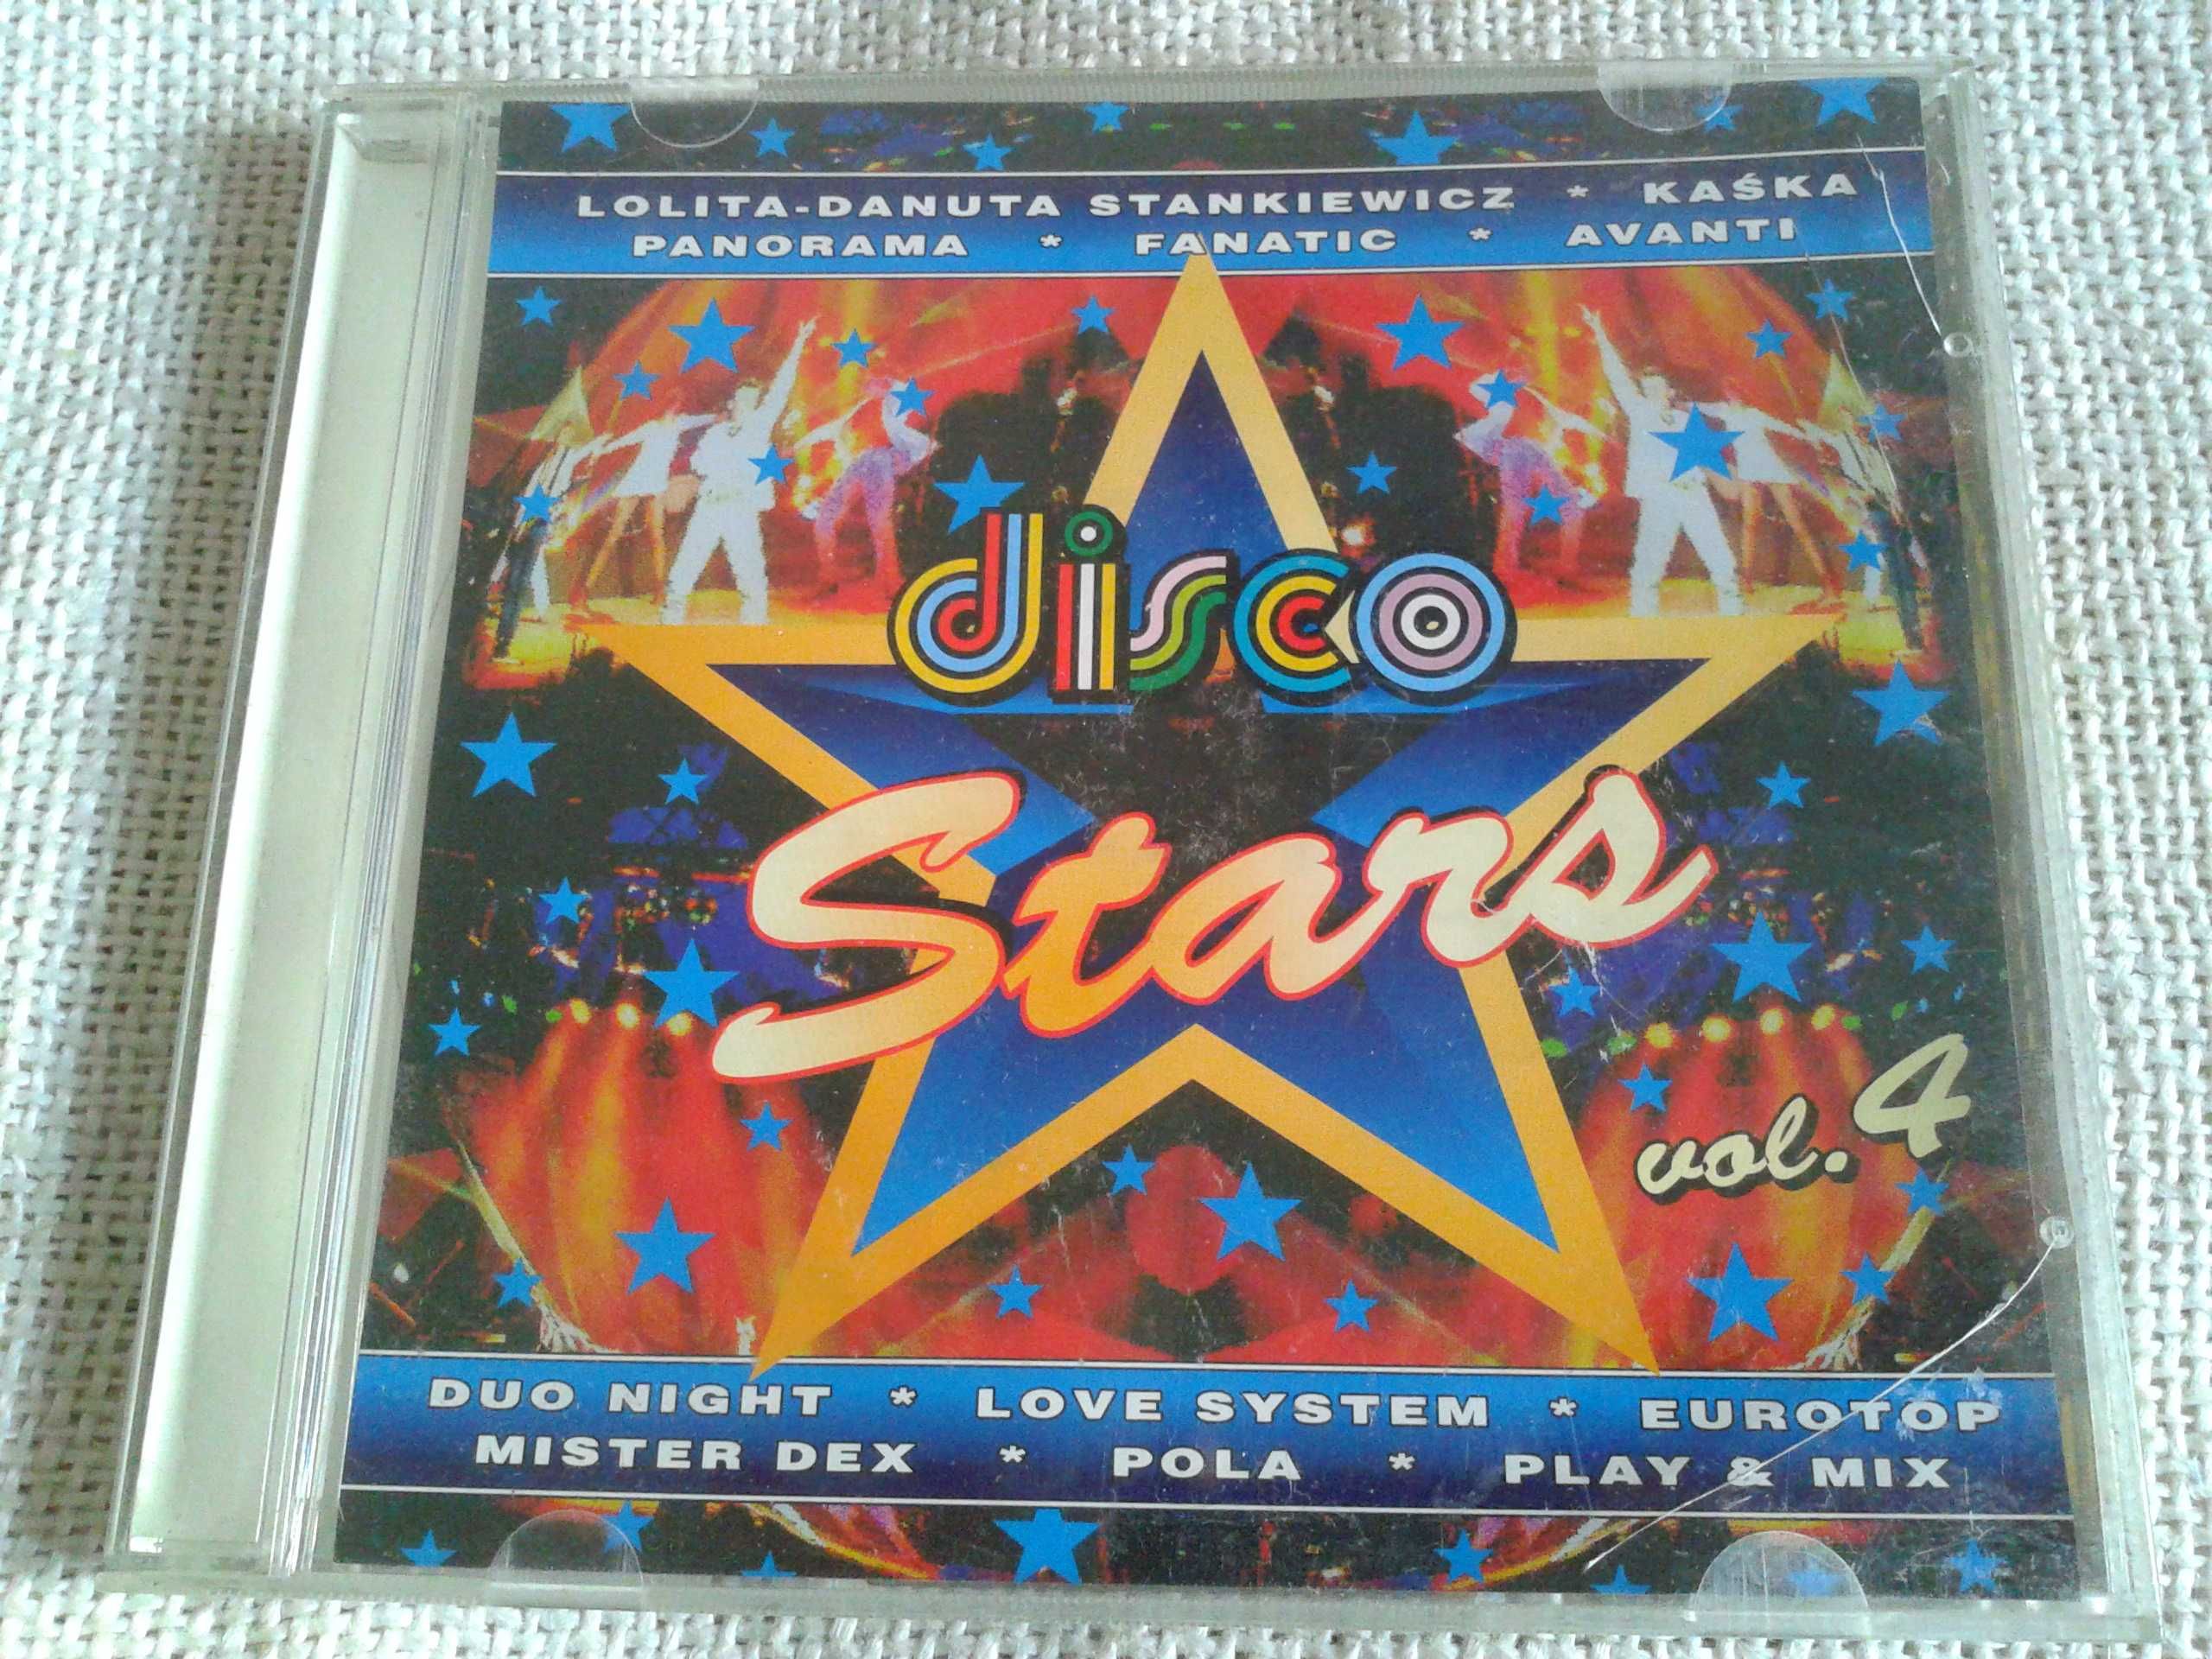 Disco Polo Stars Vol. 4  CD